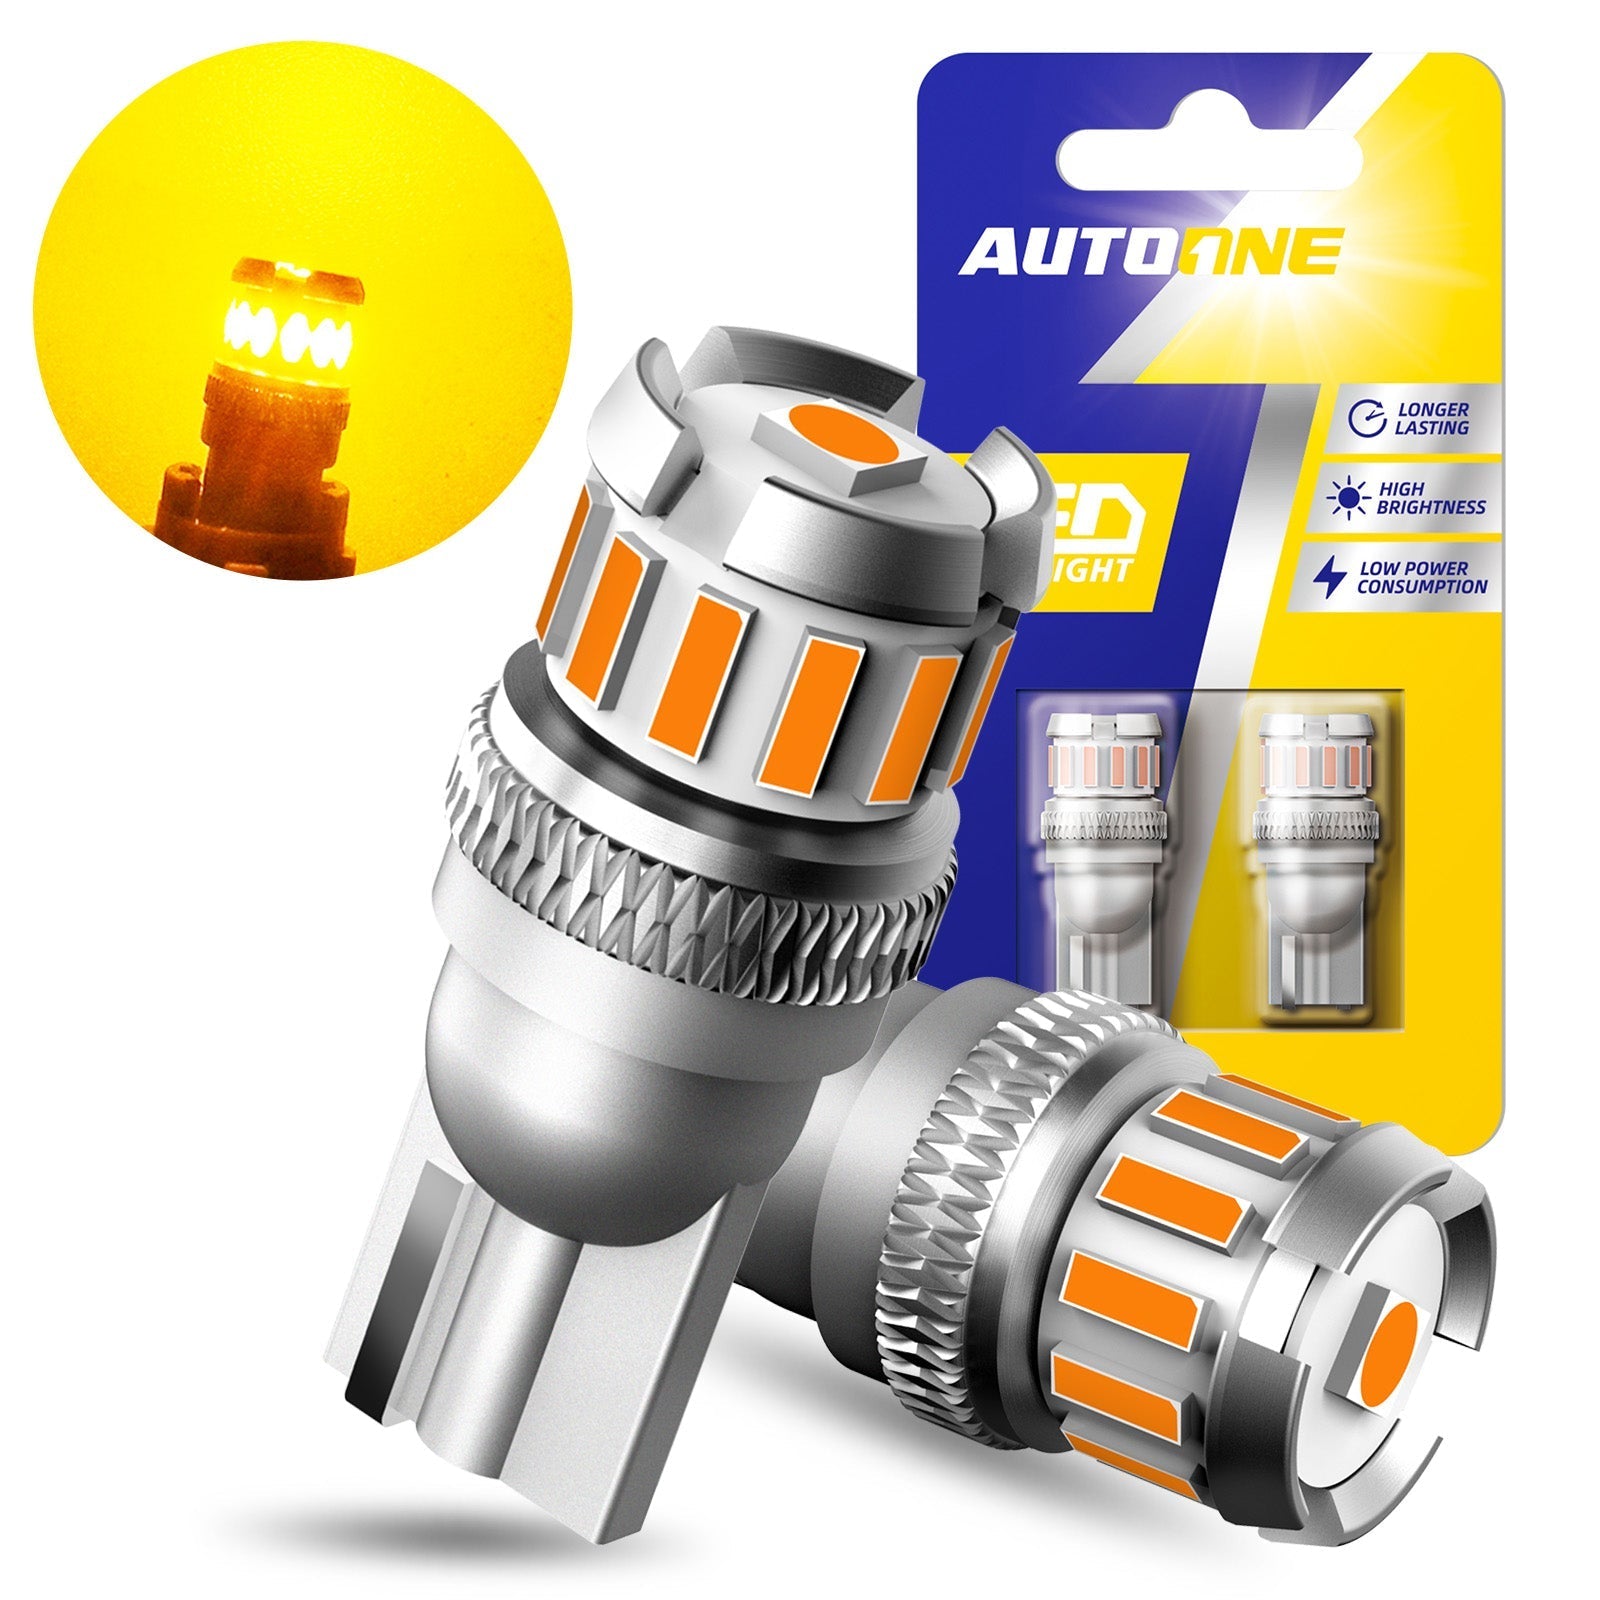 Autoone Headlight Bulb T10 168 2825 W5W 194 LED Bulb 6500K Yellow, Interior & Exterior Car Lights 2 PCS